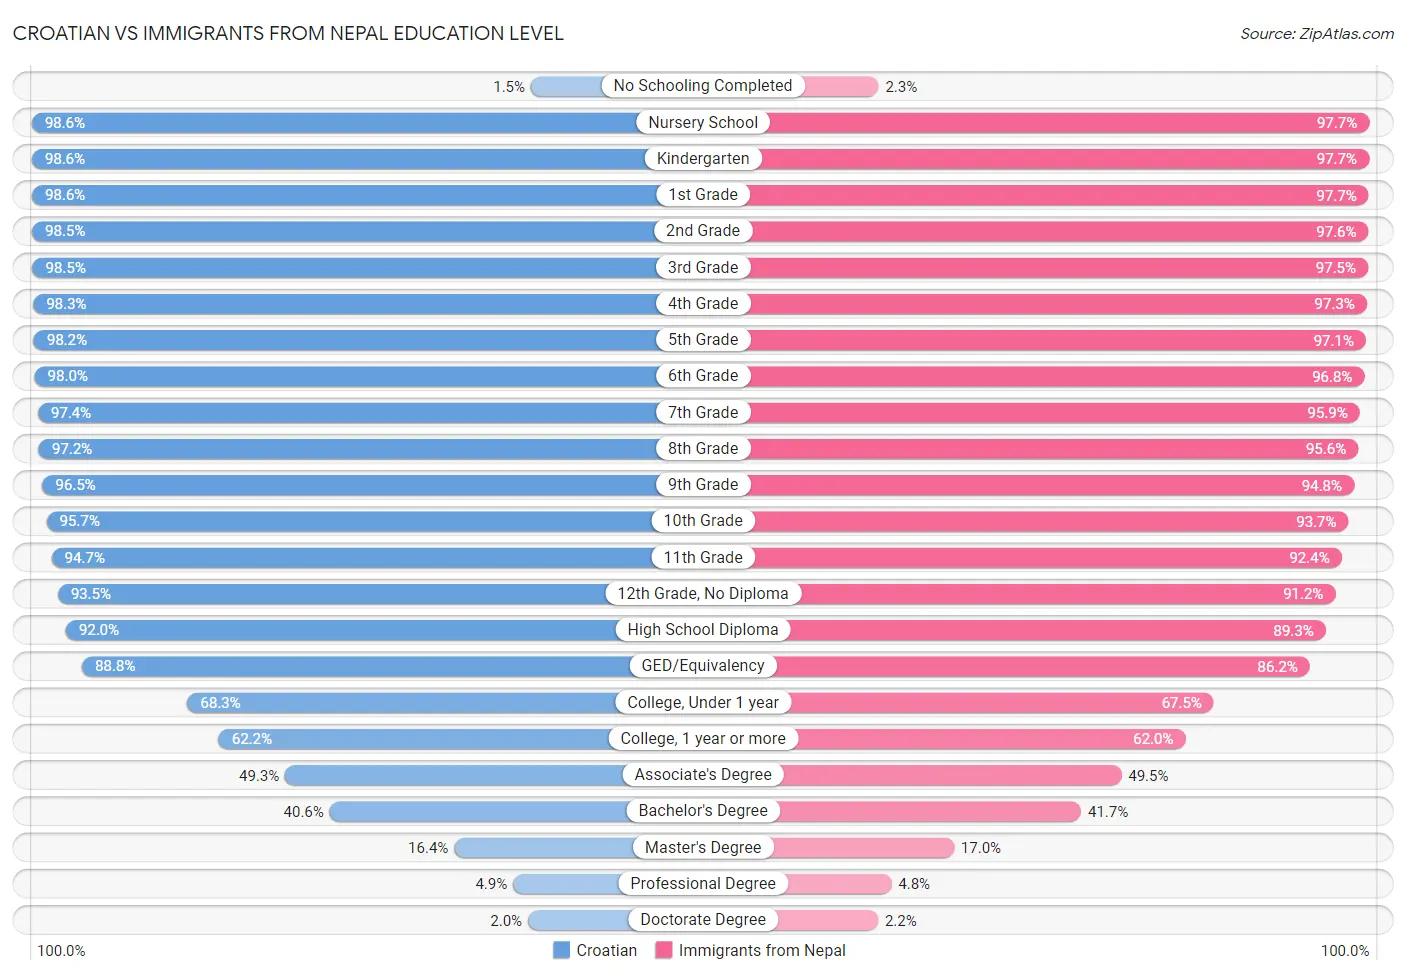 Croatian vs Immigrants from Nepal Education Level